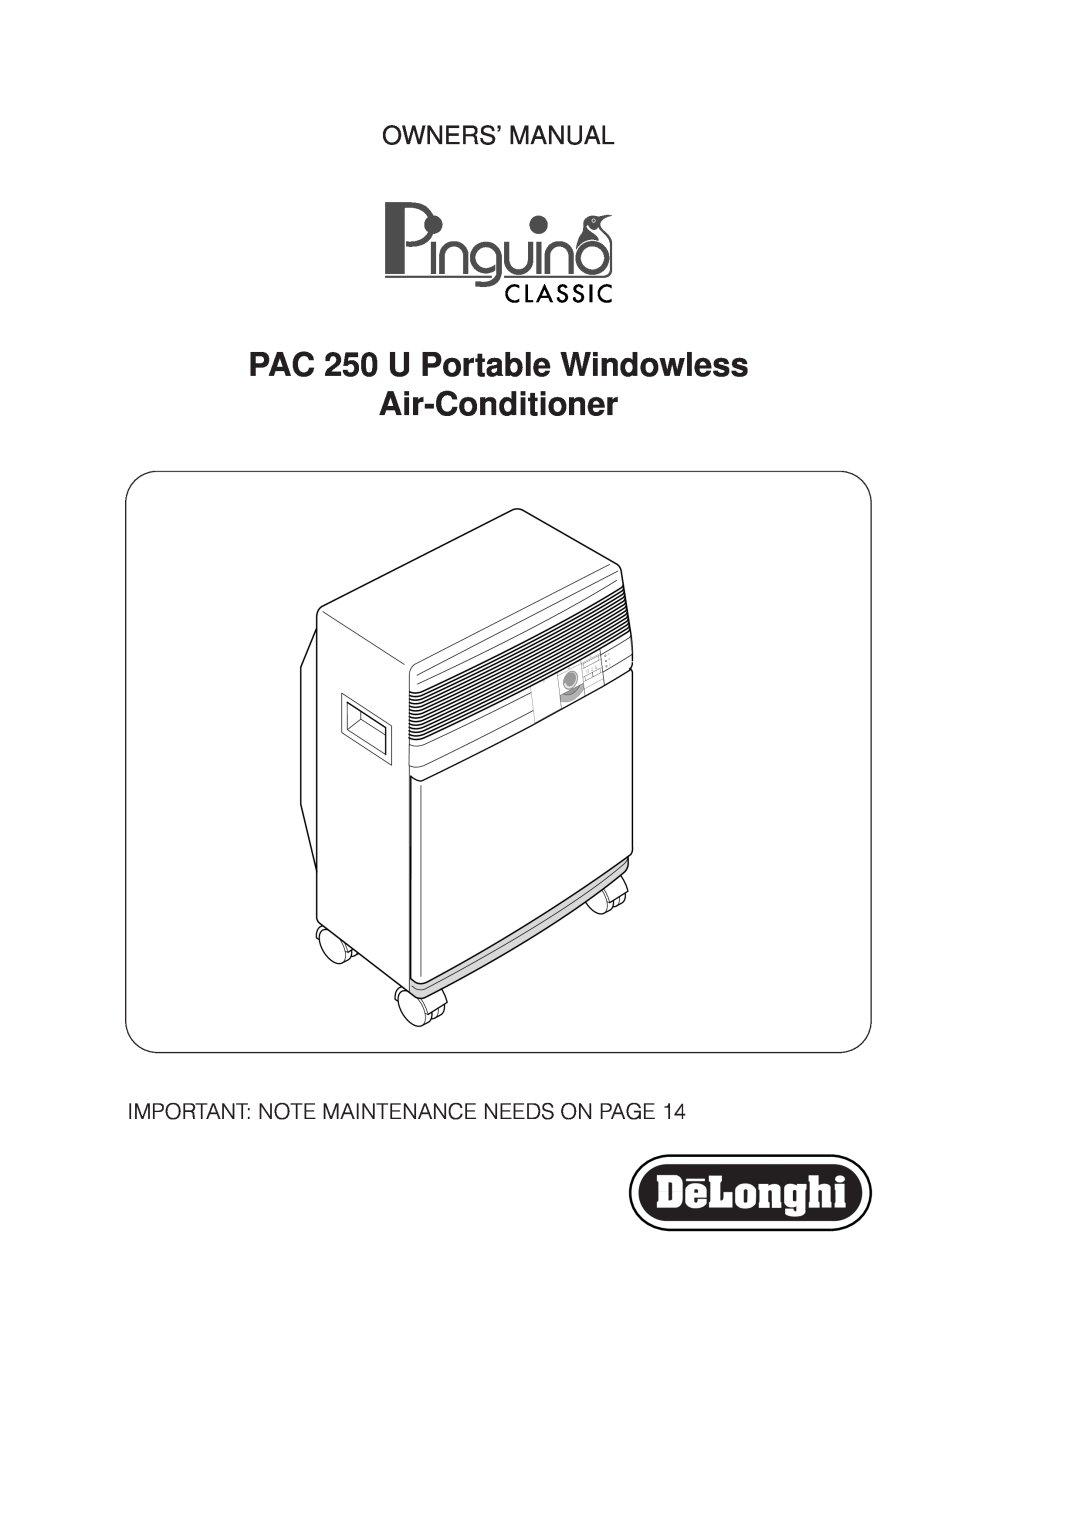 DeLonghi owner manual PAC 250 U Portable Windowless Air-Conditioner, Owners’ Manual 